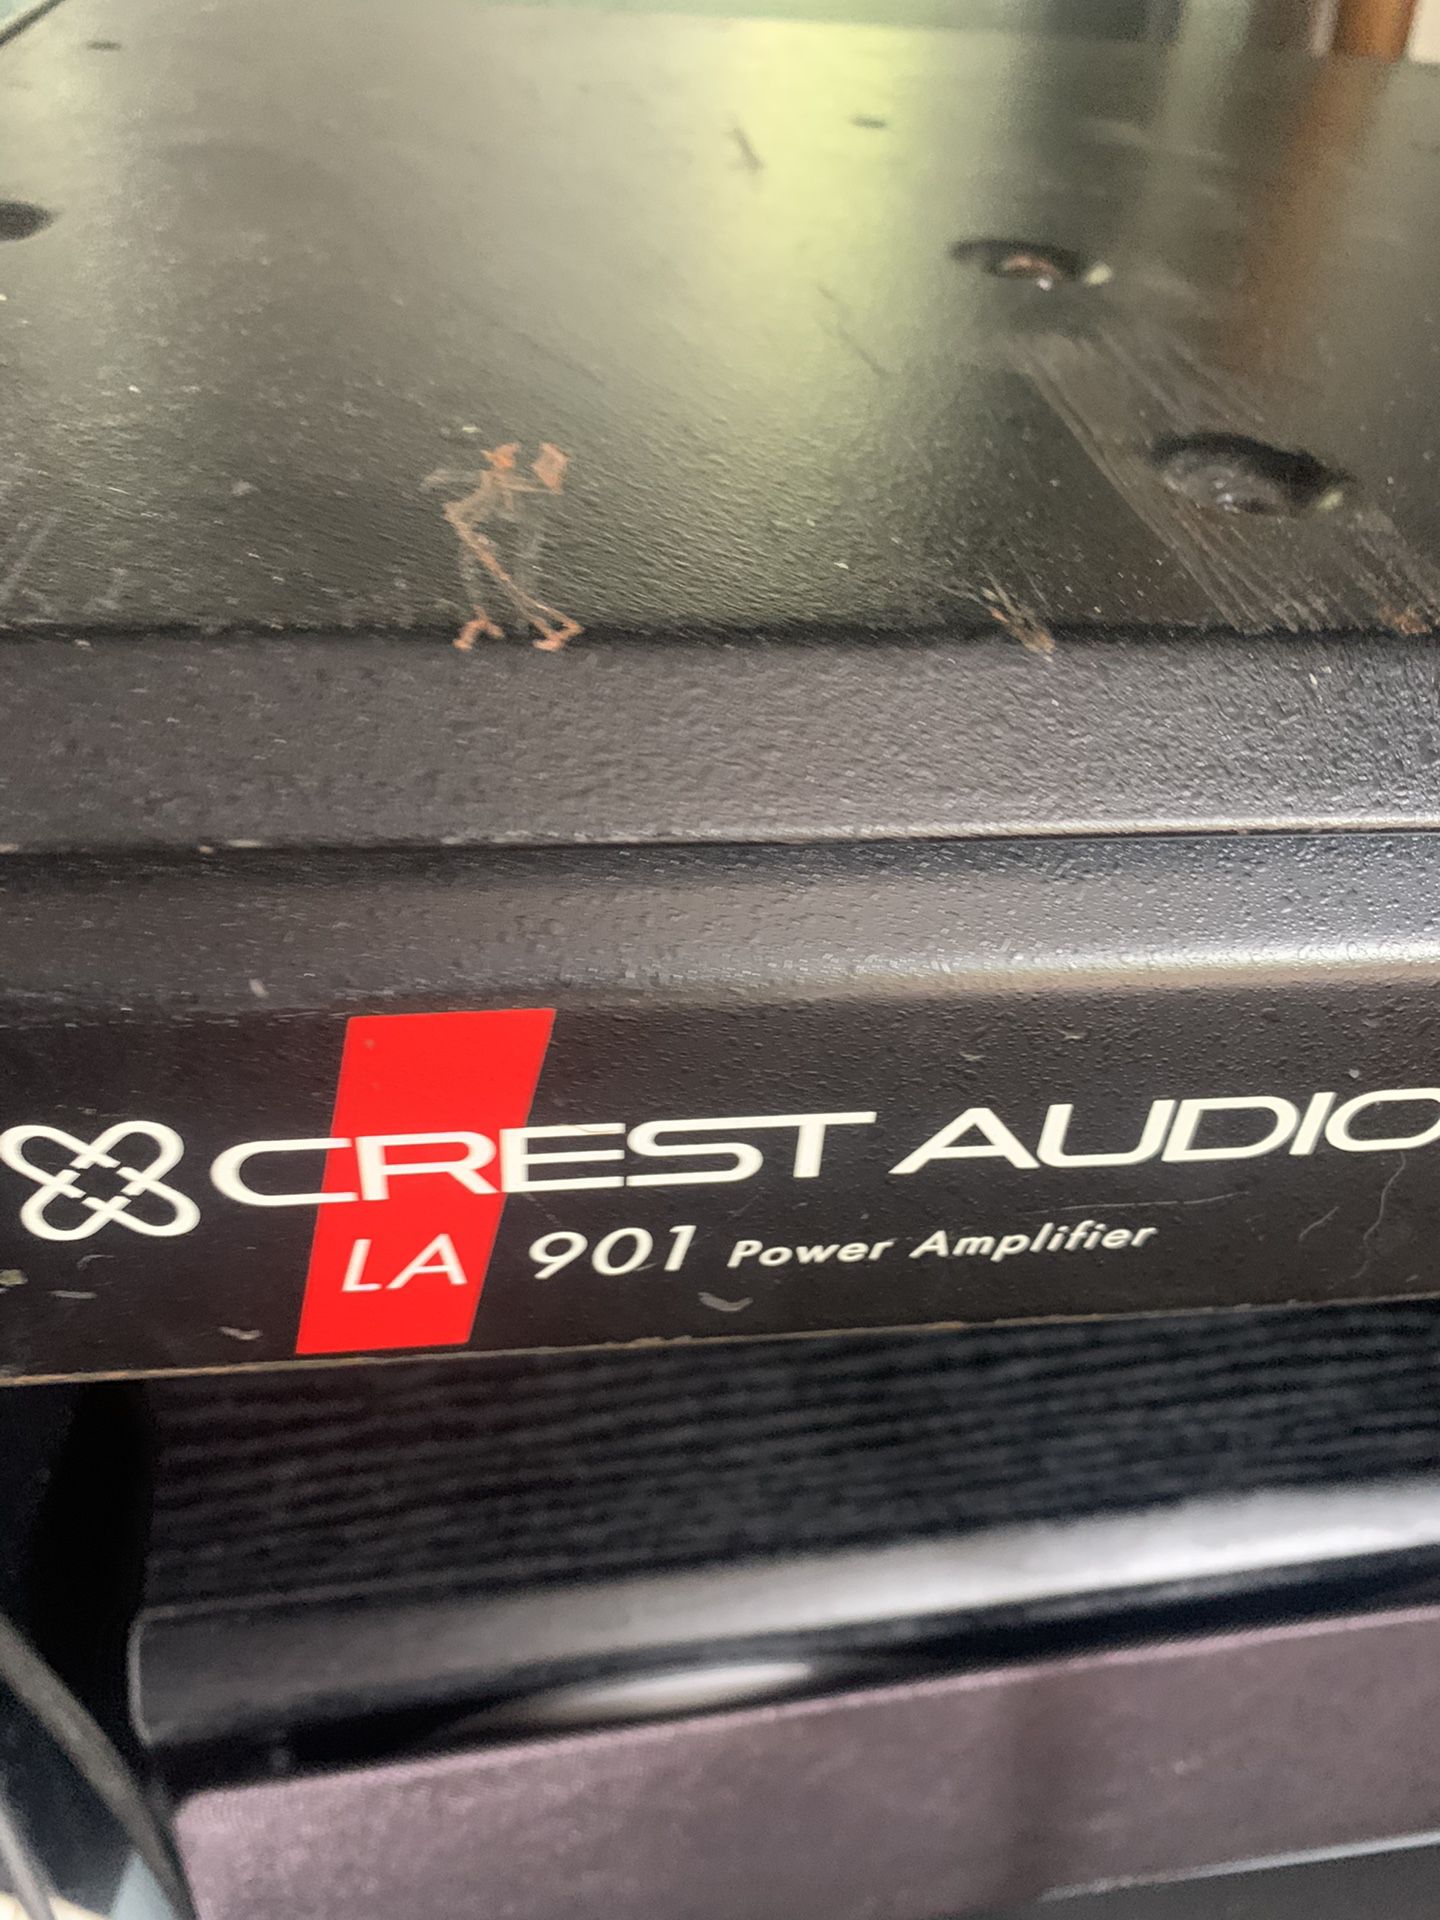 Crest audio power amplifier